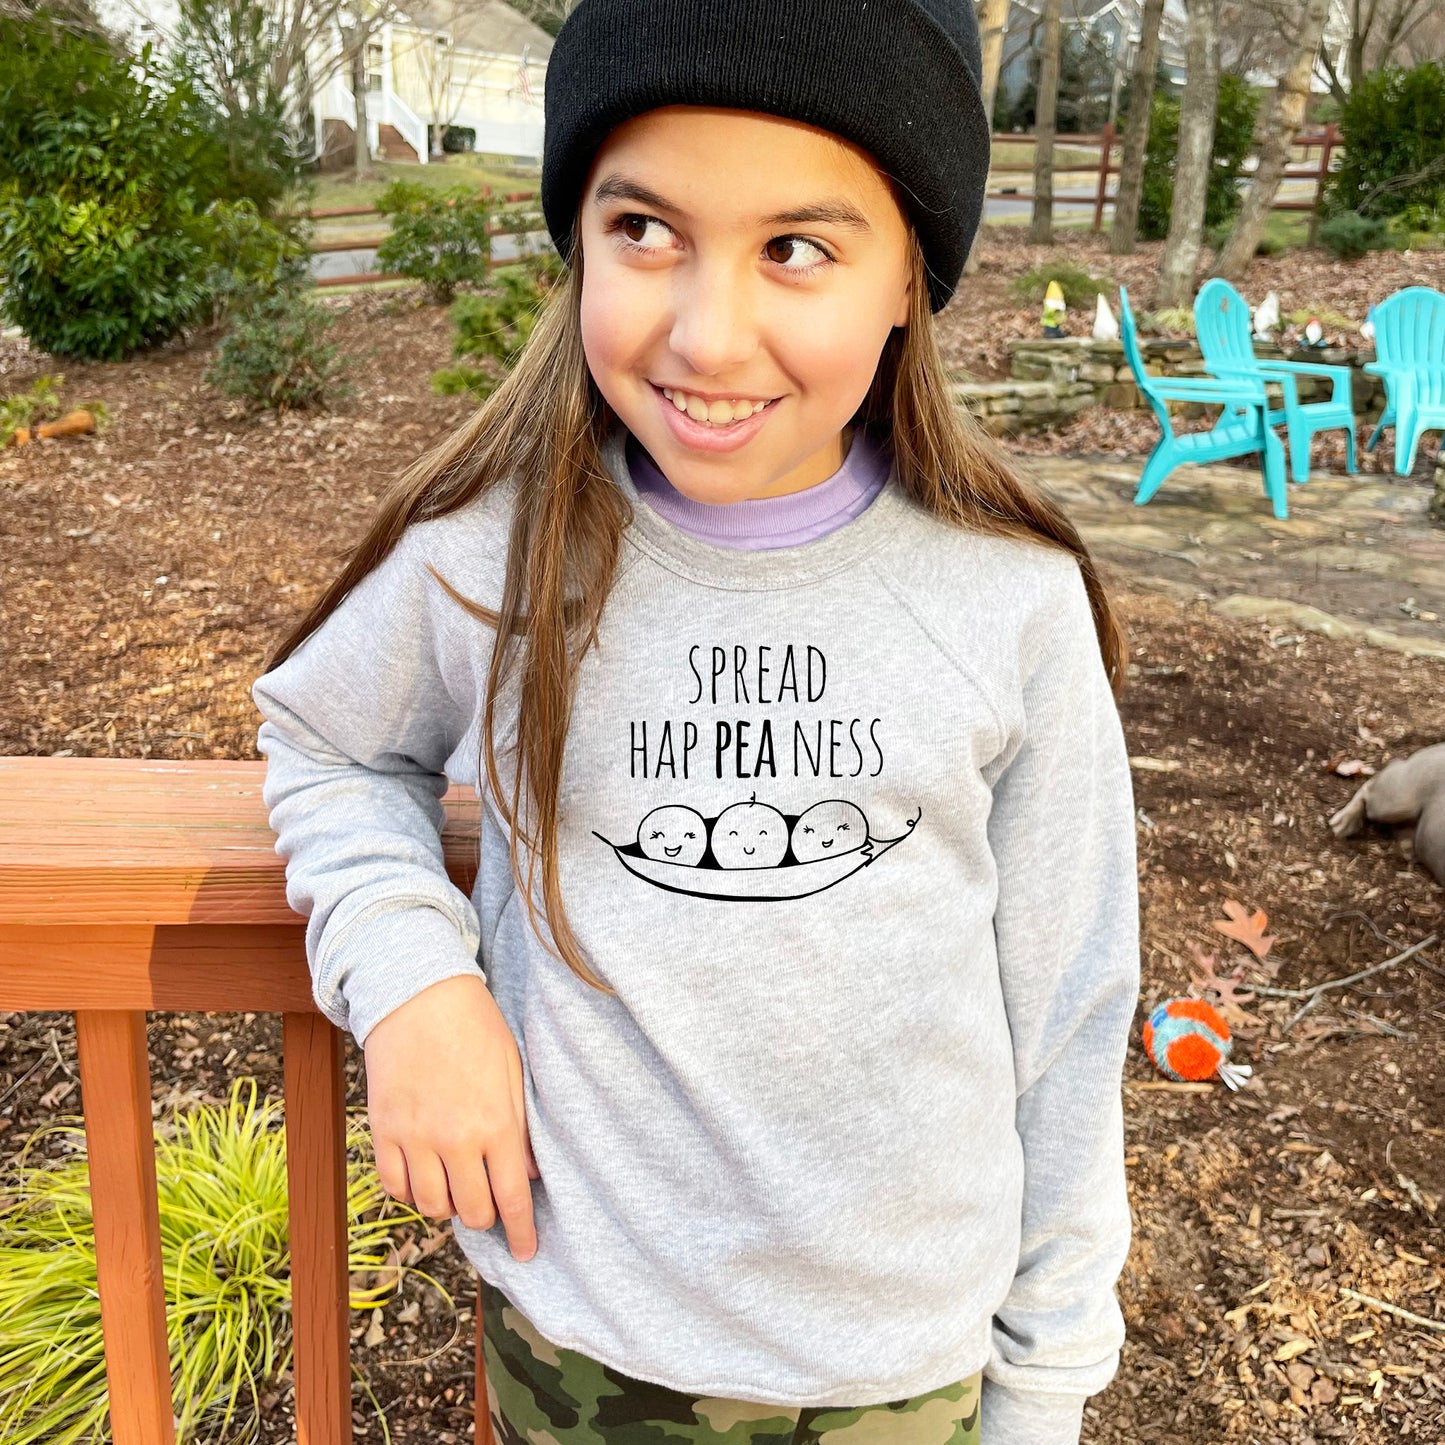 Spread Hap Pea Ness - Kid's Sweatshirt - Heather Gray or Mauve